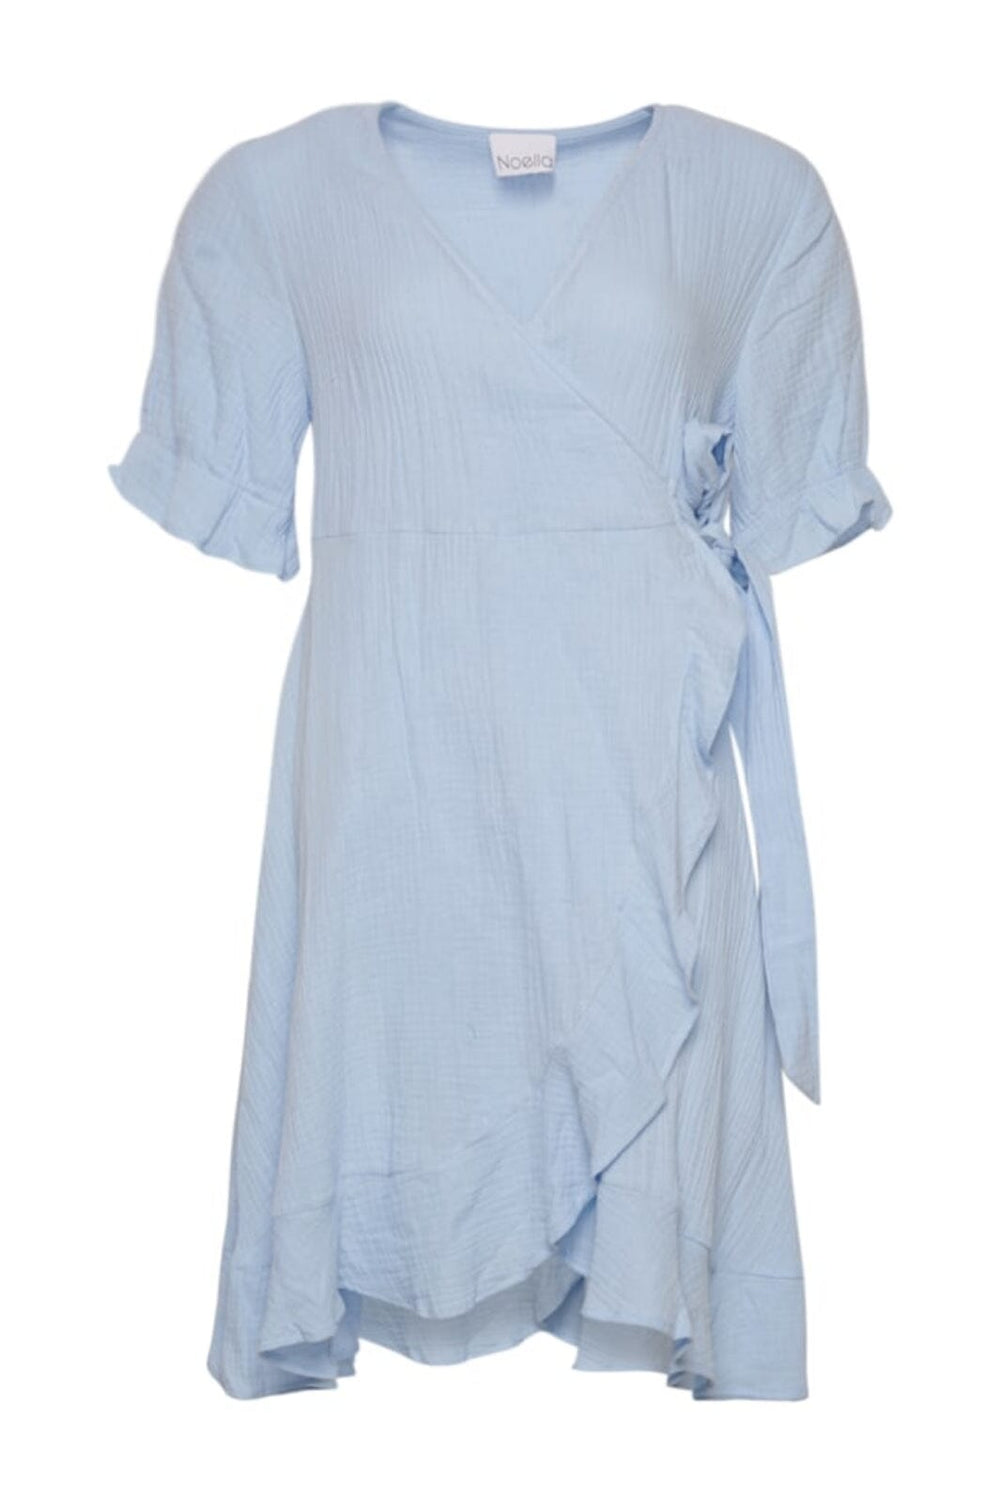 Noella - Aleppo Short Dress - Light Blue Kjoler 